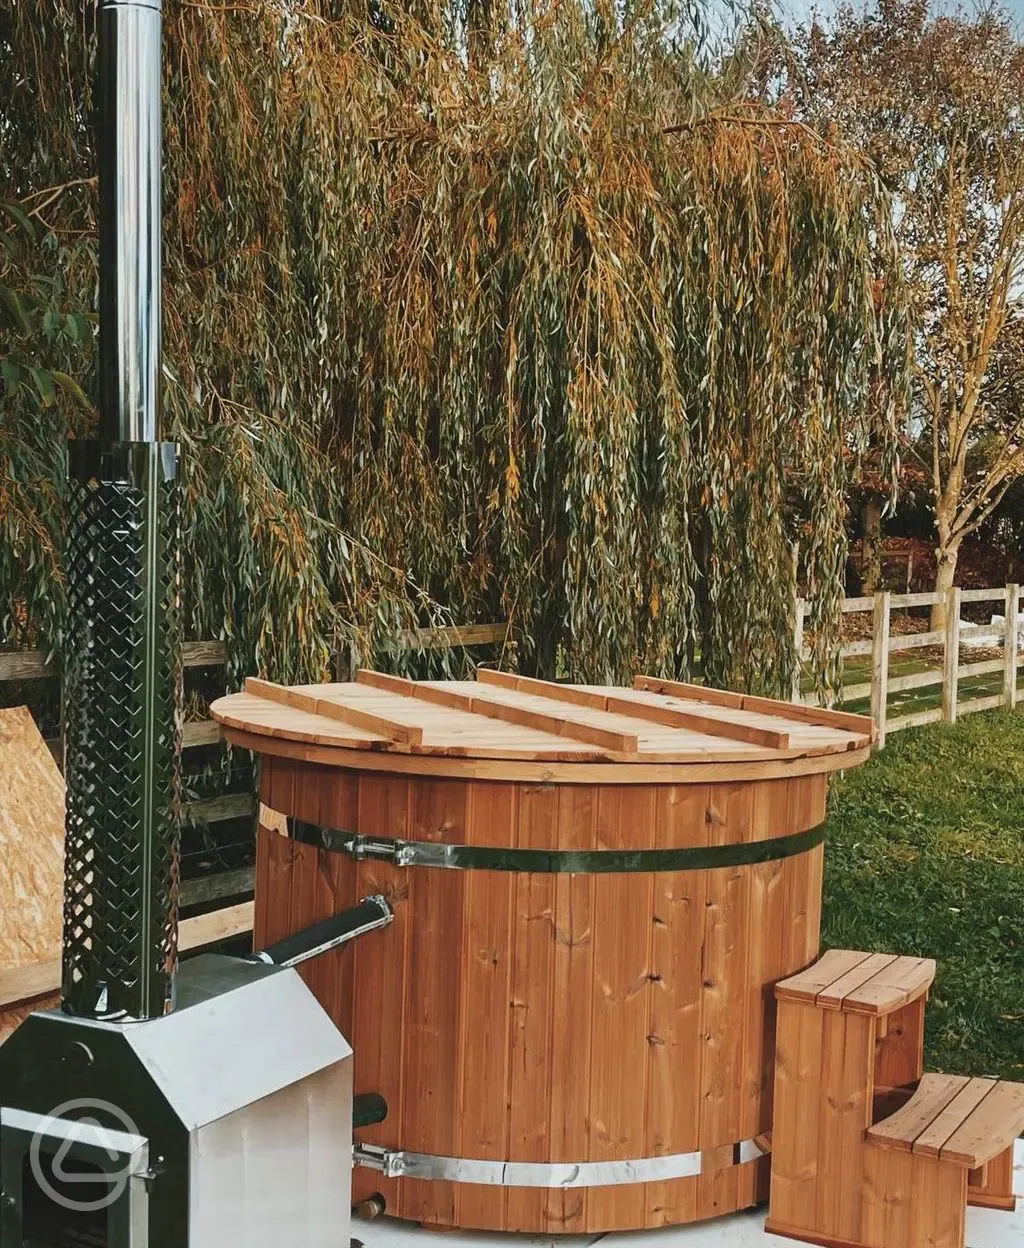 Woodfired hot tub